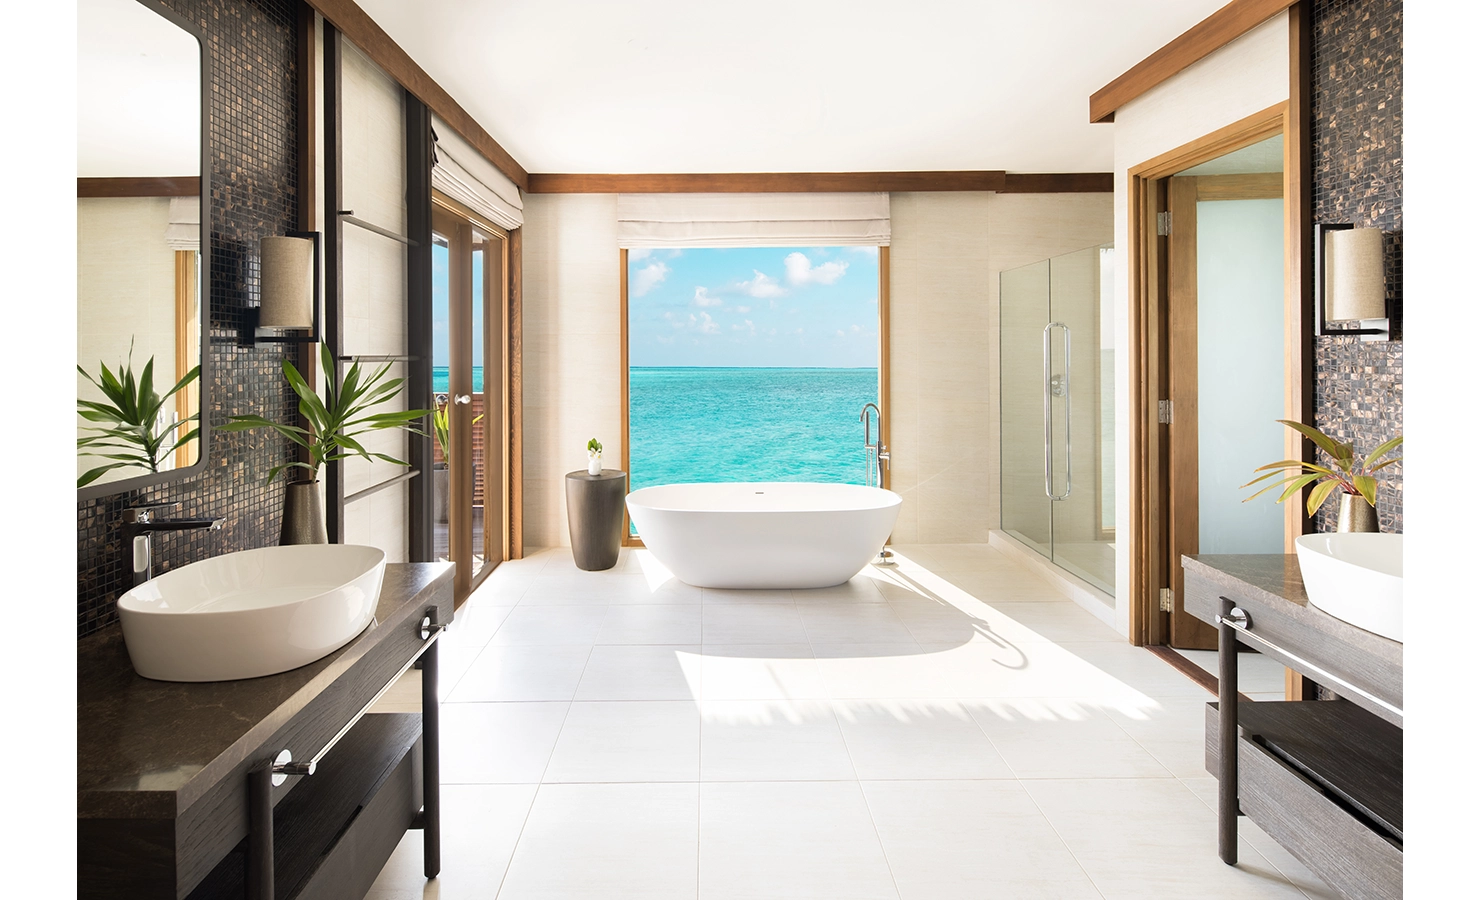 Perfect Hideaways, Conrad Maldives, Luxury accommodation sunroom, Bathroom